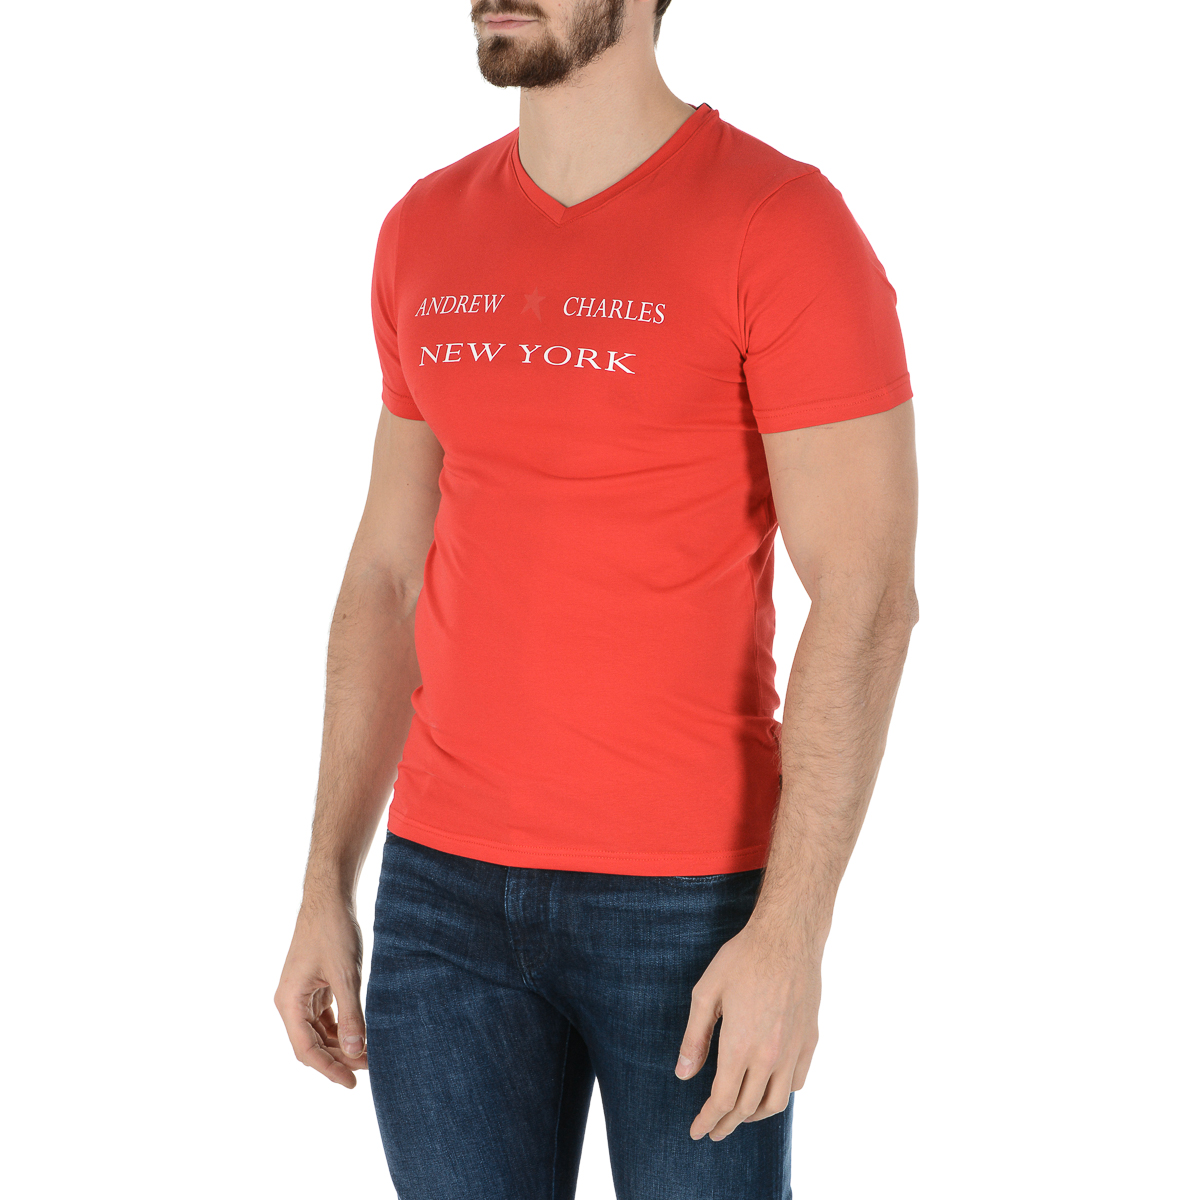 Andrew Charles Mens T-Shirt Short Sleeves V-Neck Red KENAN